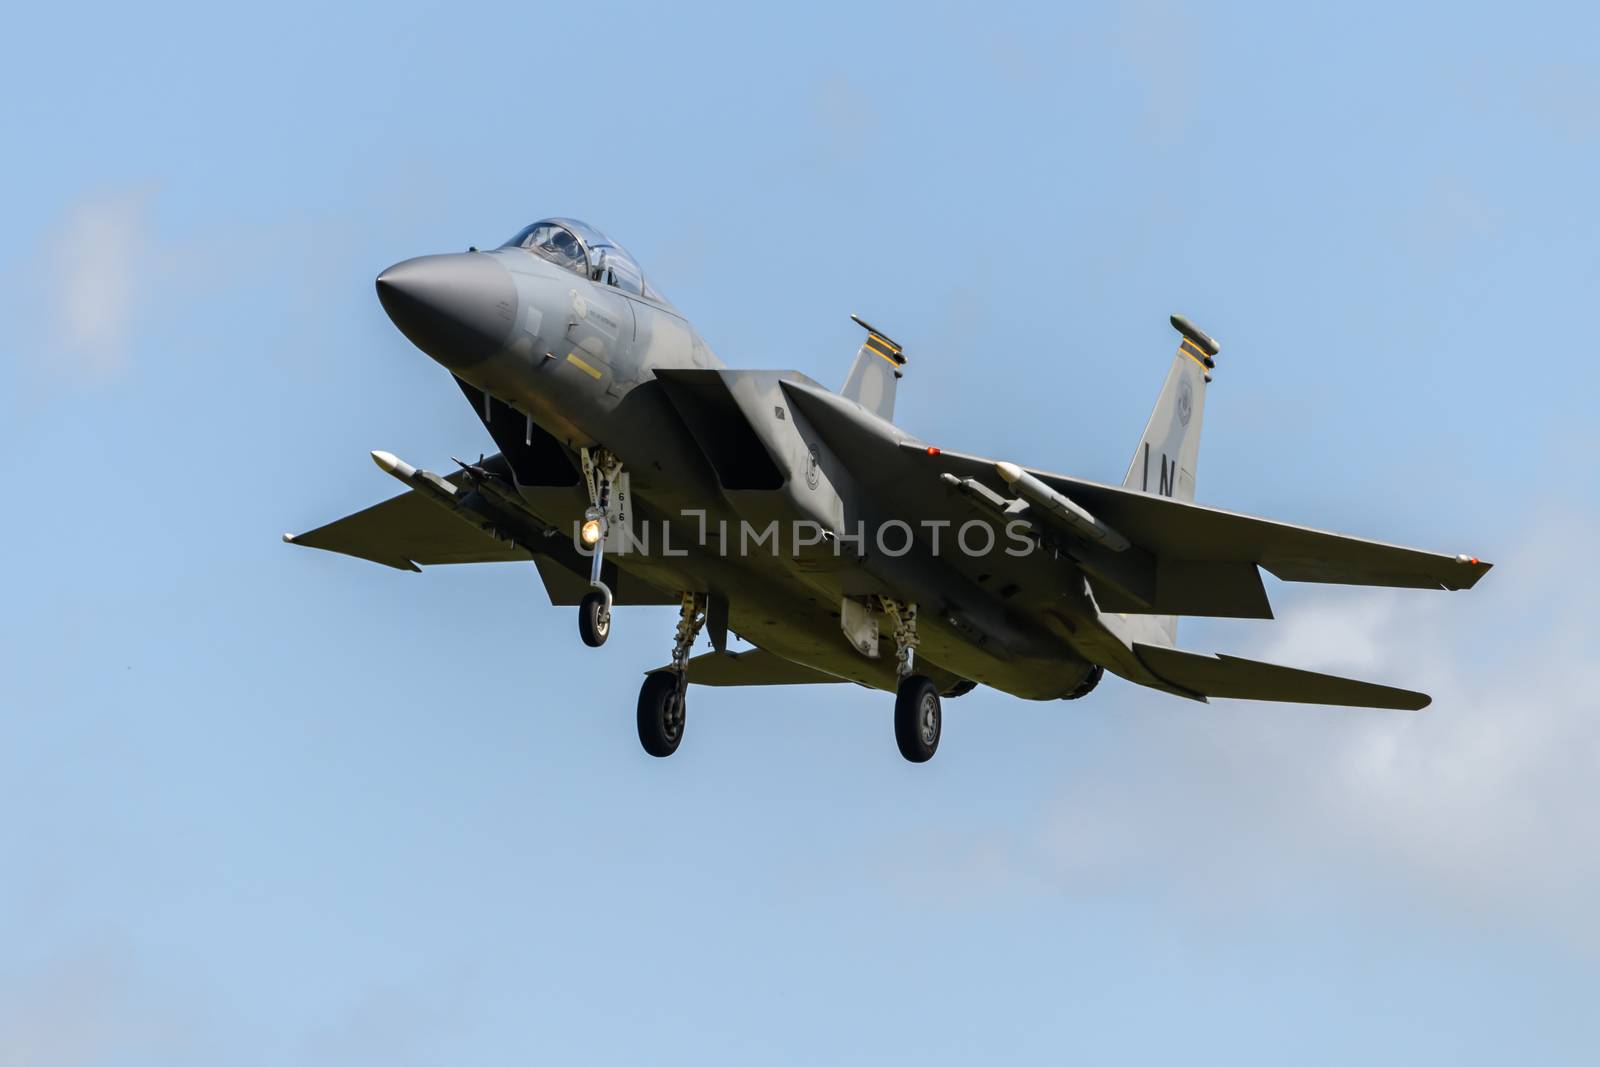 F-15 Eagle Jet on final approach to land at RAF Lakenheath